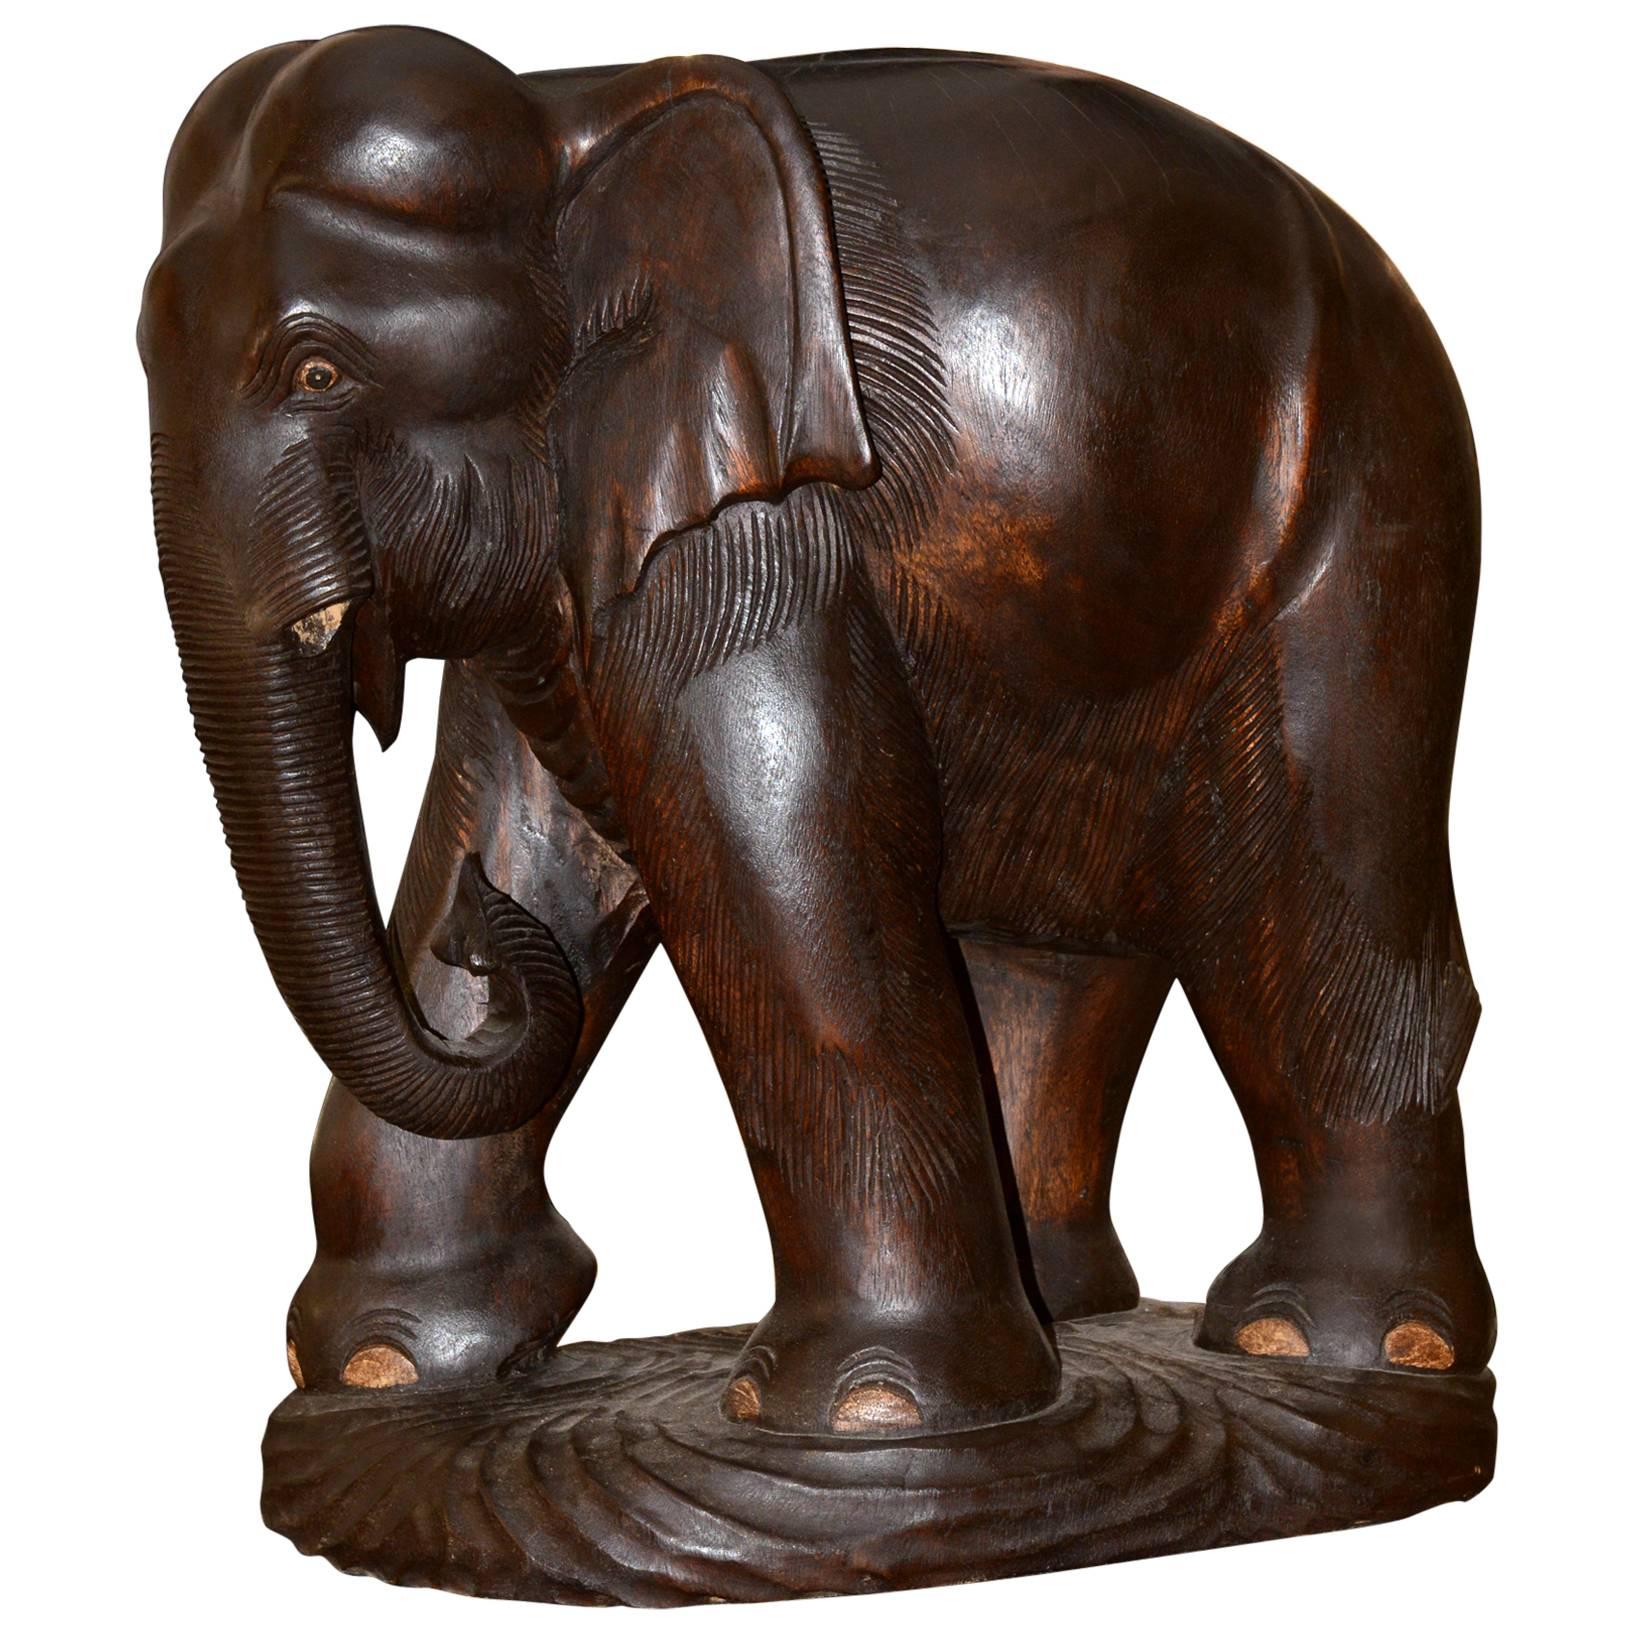 Skulptur eines Elefanten aus edlem Holz